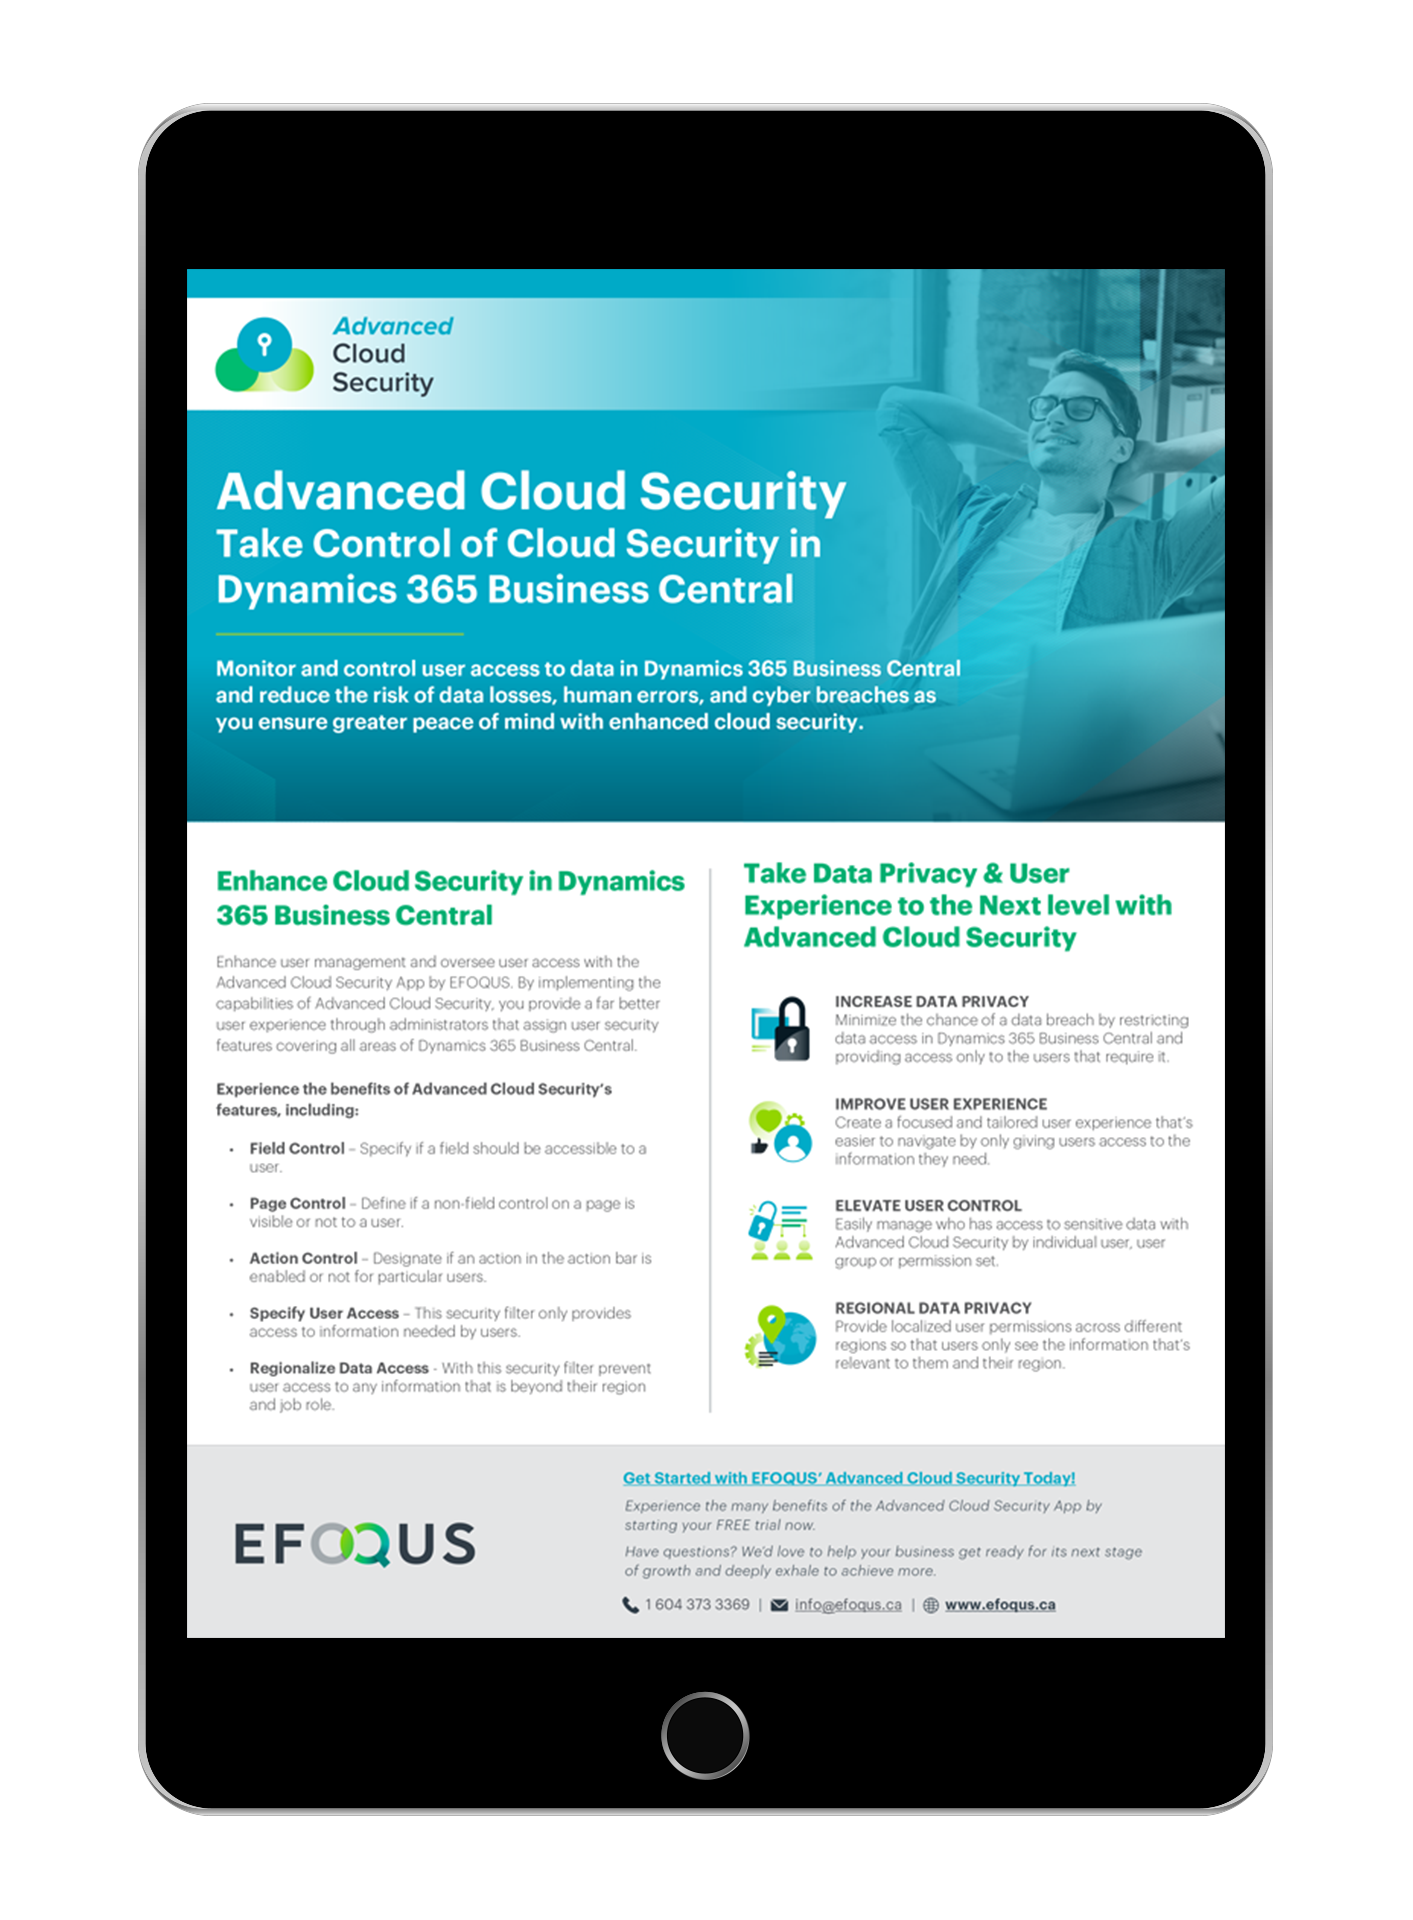 EFOQUS - advanced cloud security guide - microsoft dynamics 365 resource